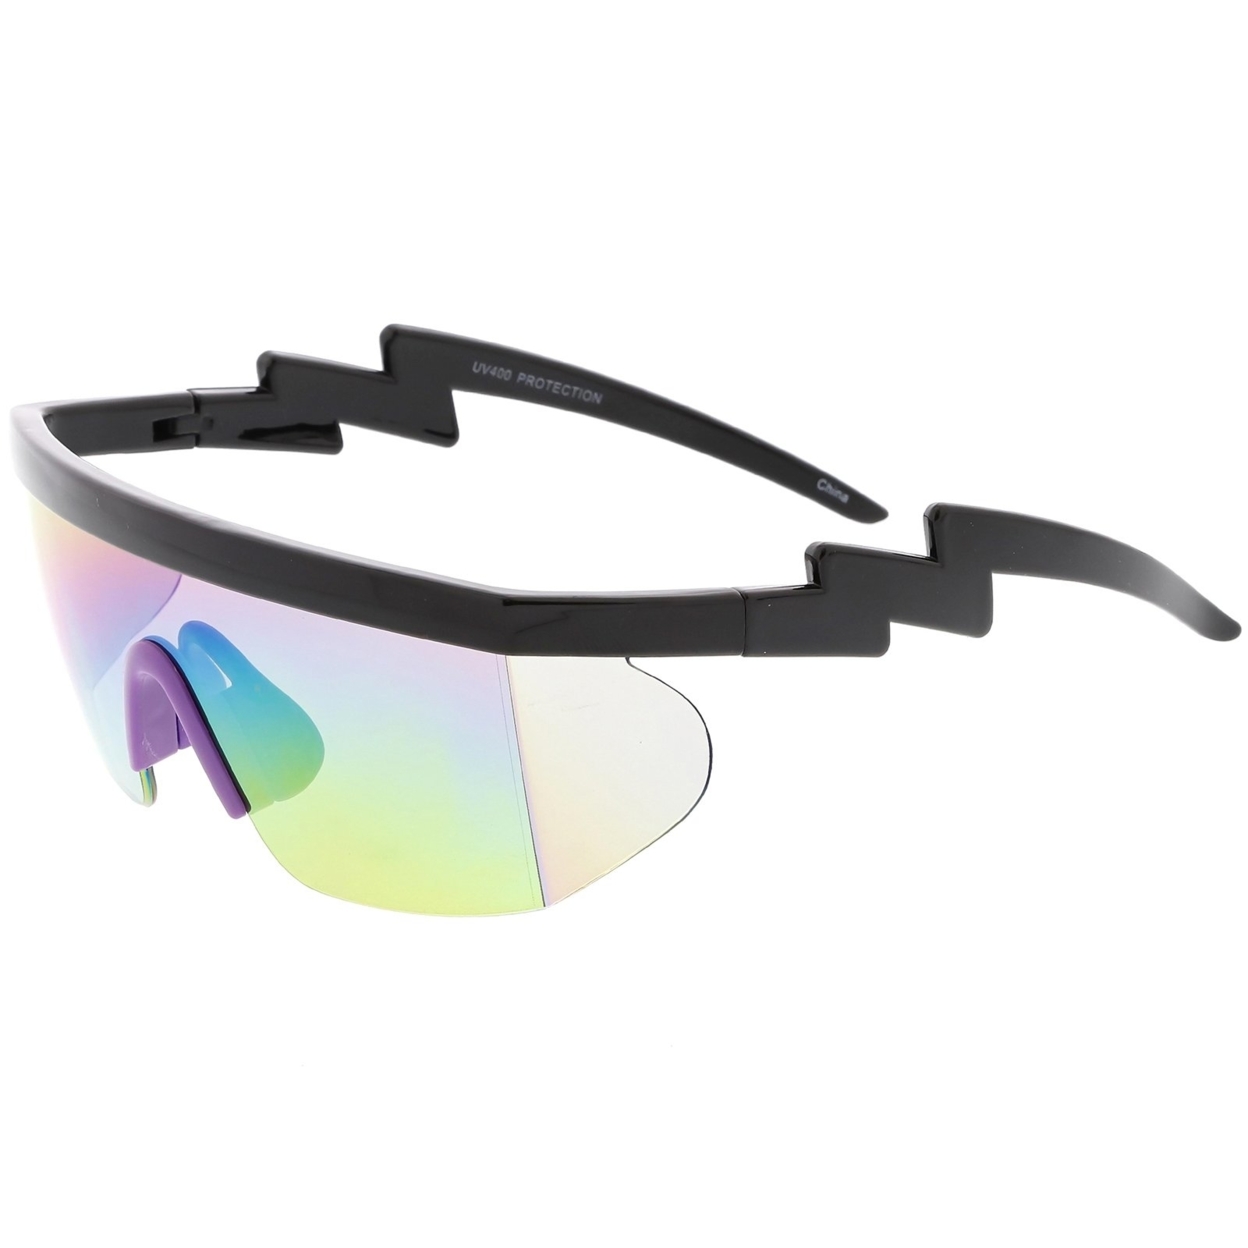 Oversize Semi Rimless Goggle Shield Sunglasses Mirrored Lens 60mm - Black Blue / Rainbow